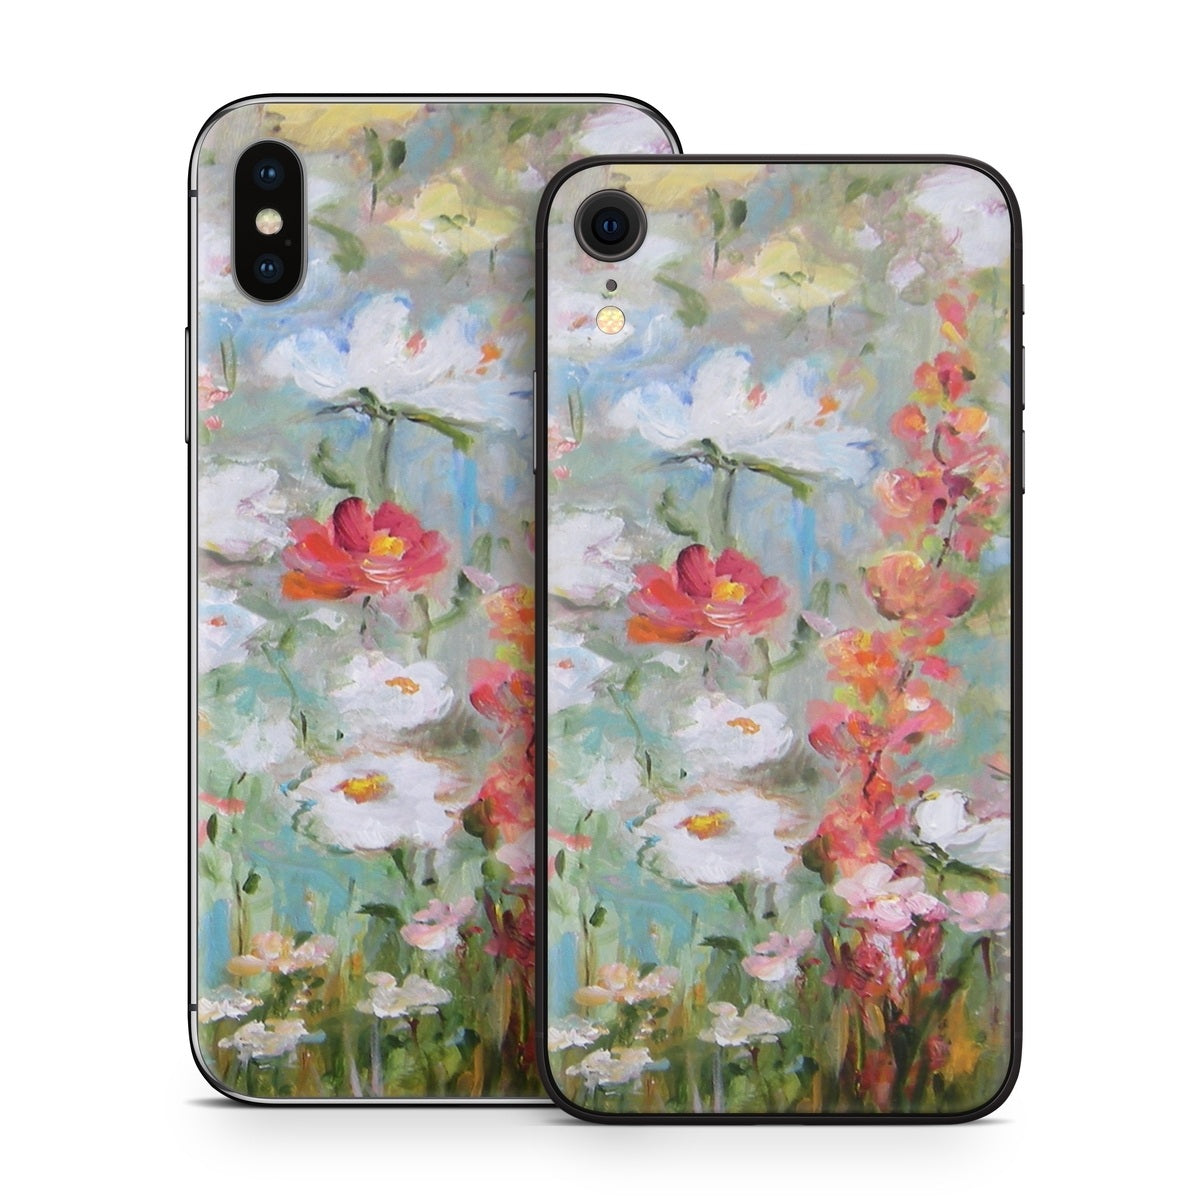 Flower Blooms - Apple iPhone X Skin